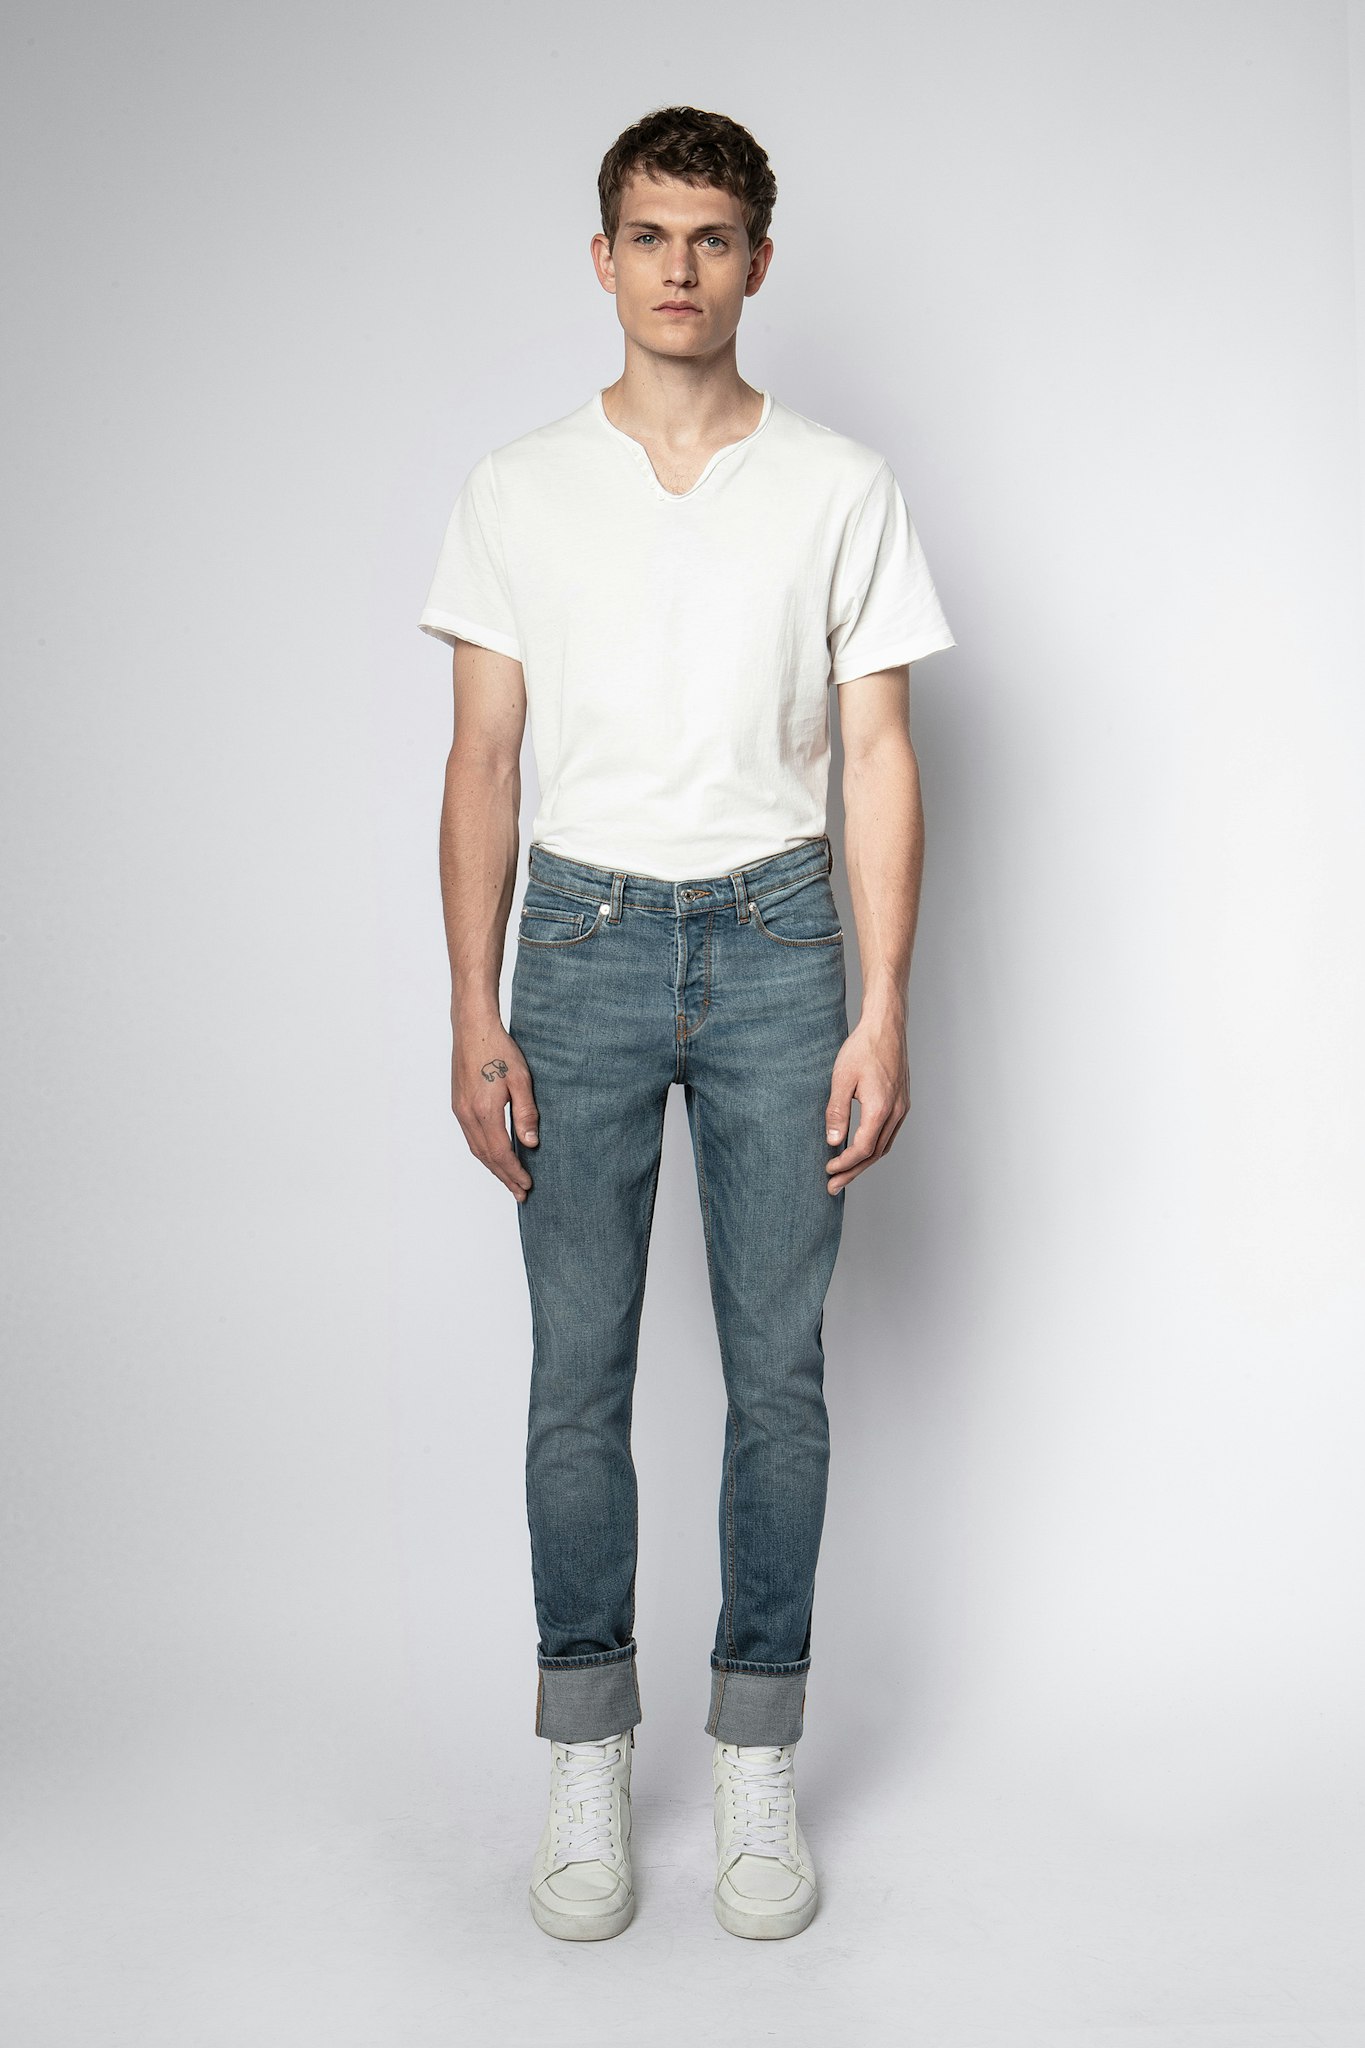 David Eco Jeans - jeans men | Zadig&Voltaire